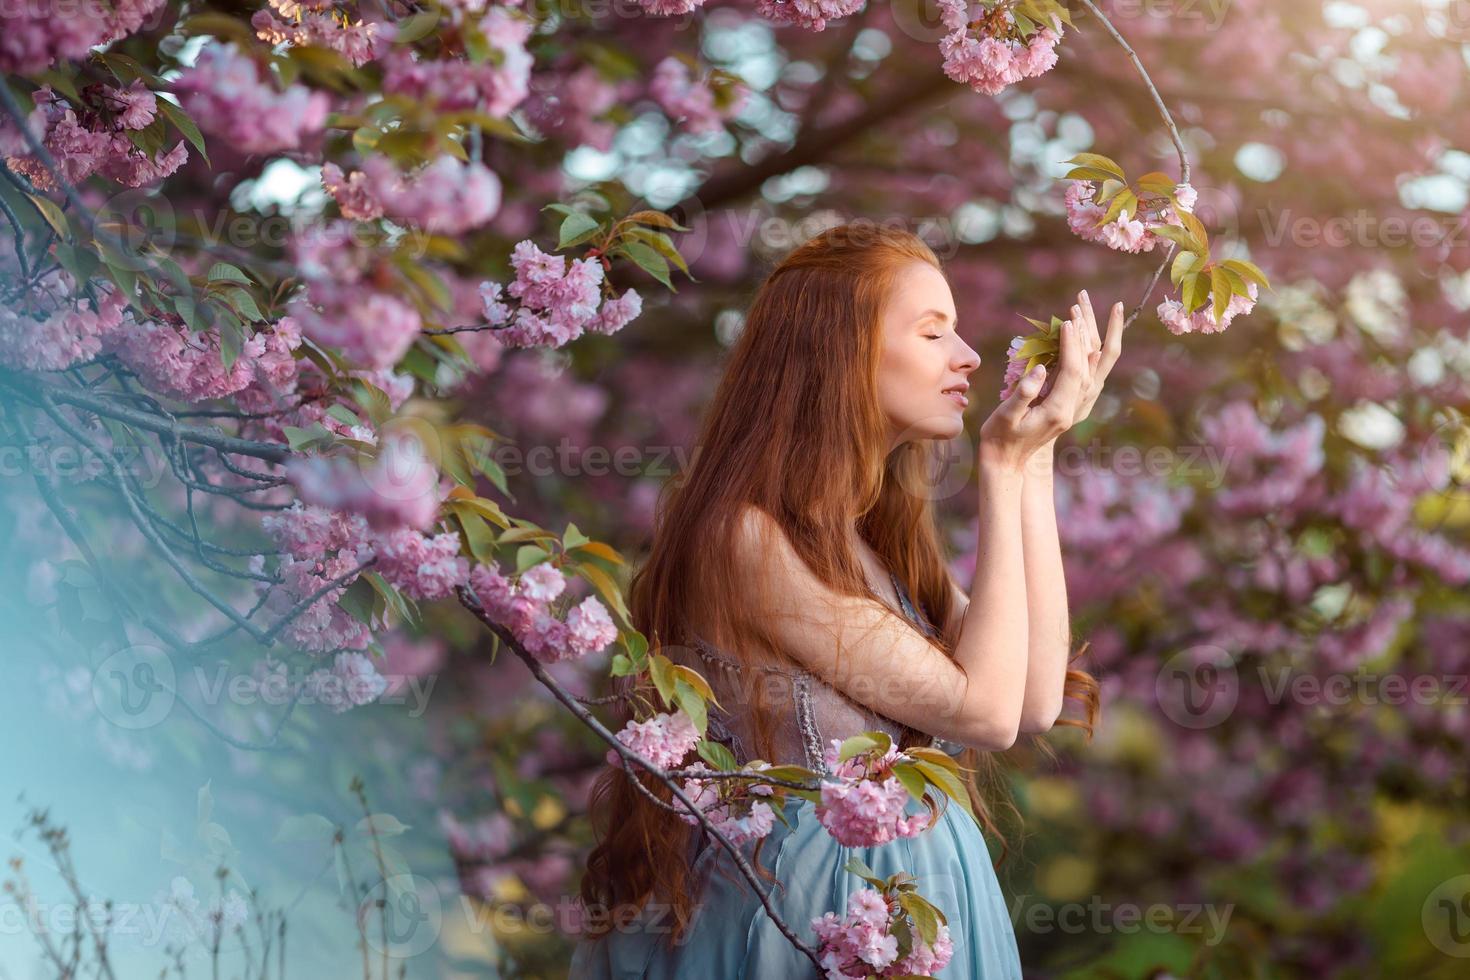 belle femme enceinte dans un jardin fleuri photo